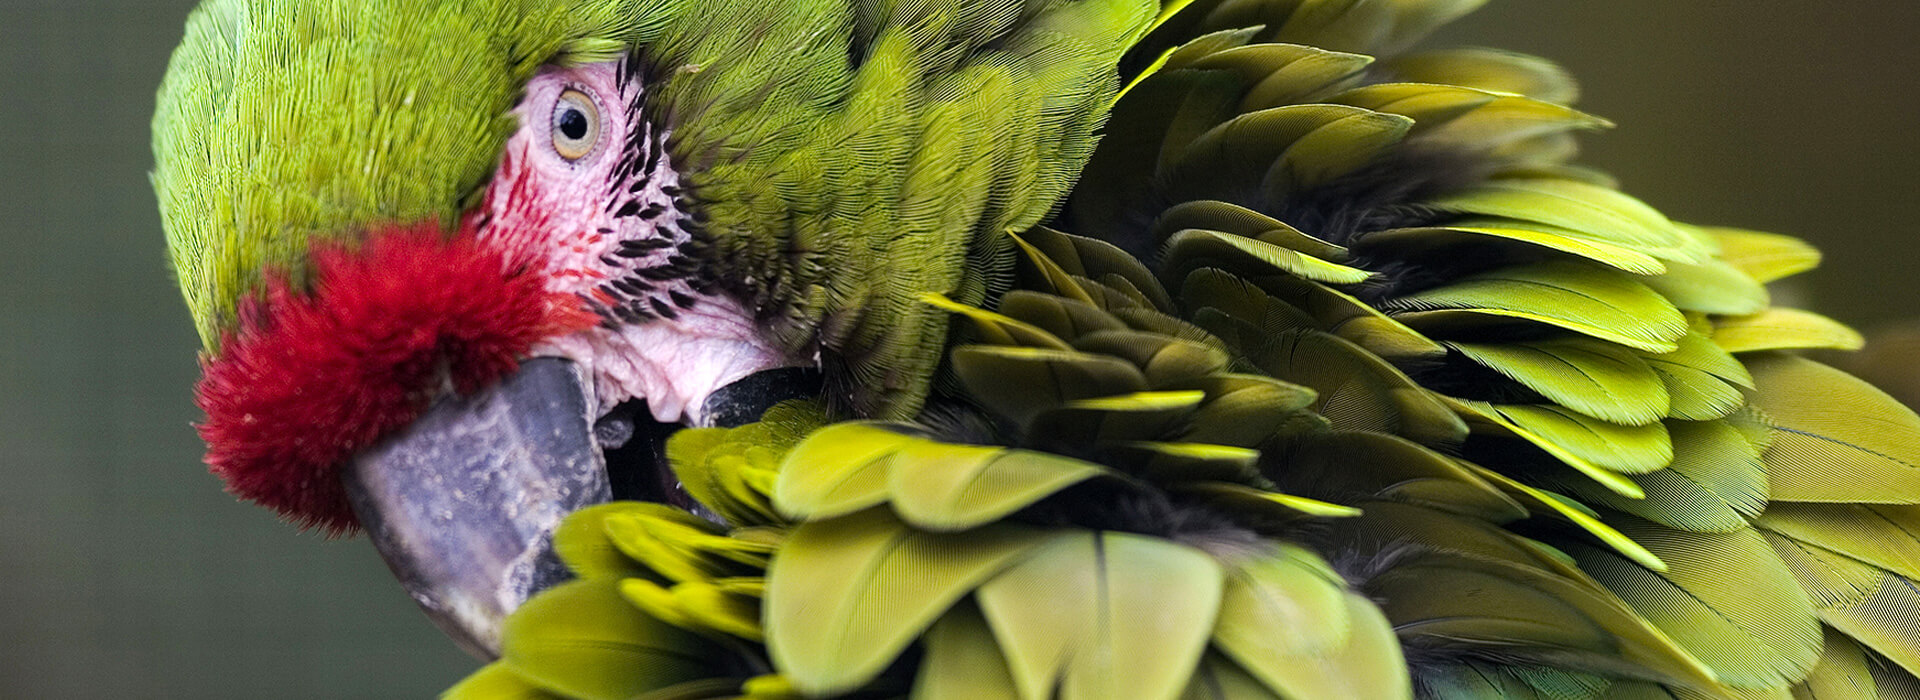 Military Macaw, Bildagentur Zoonar GmbH, Shutterstock